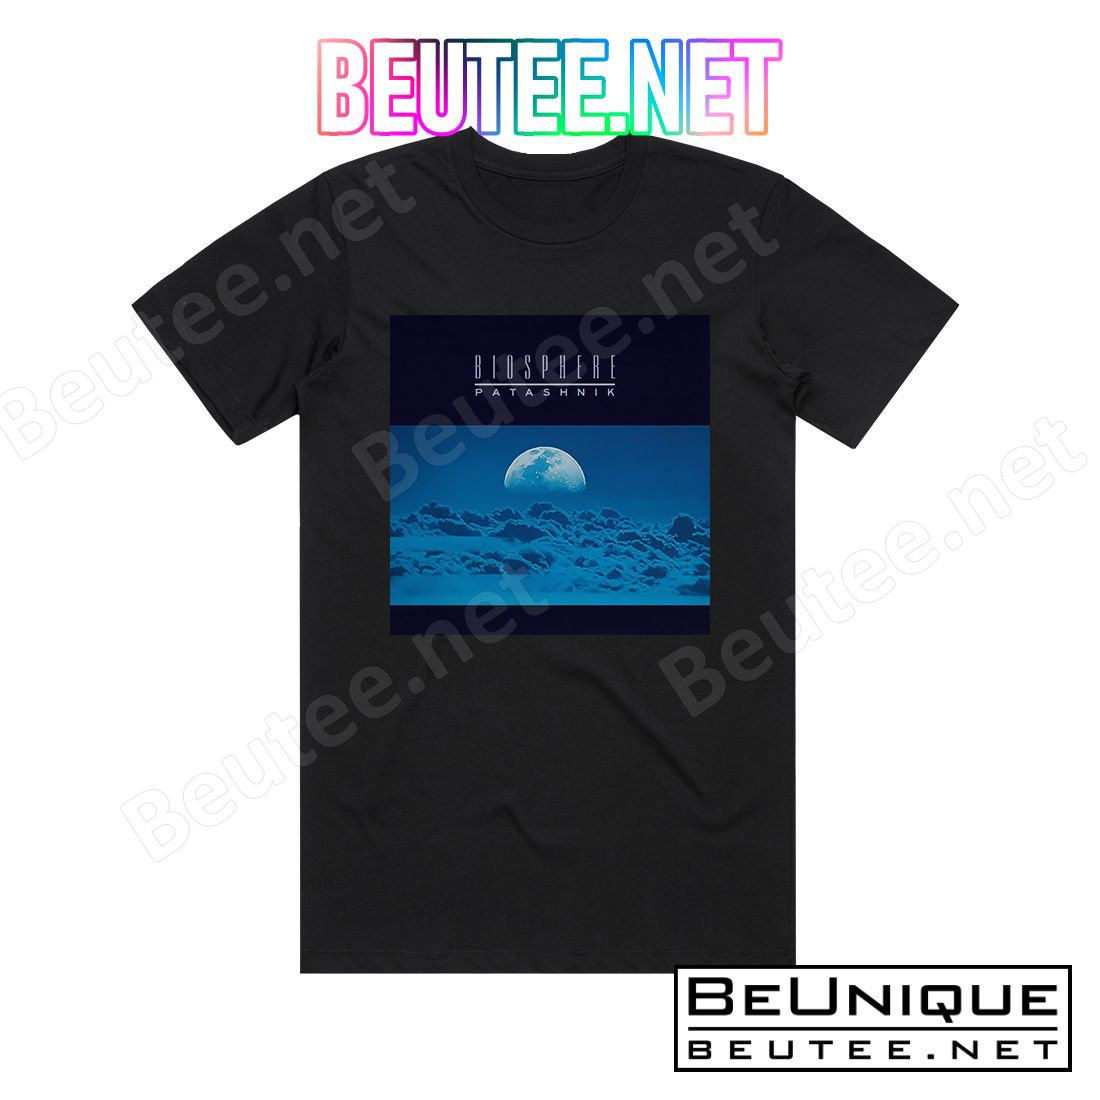 Biosphere Patashnik 1 Album Cover T-Shirt